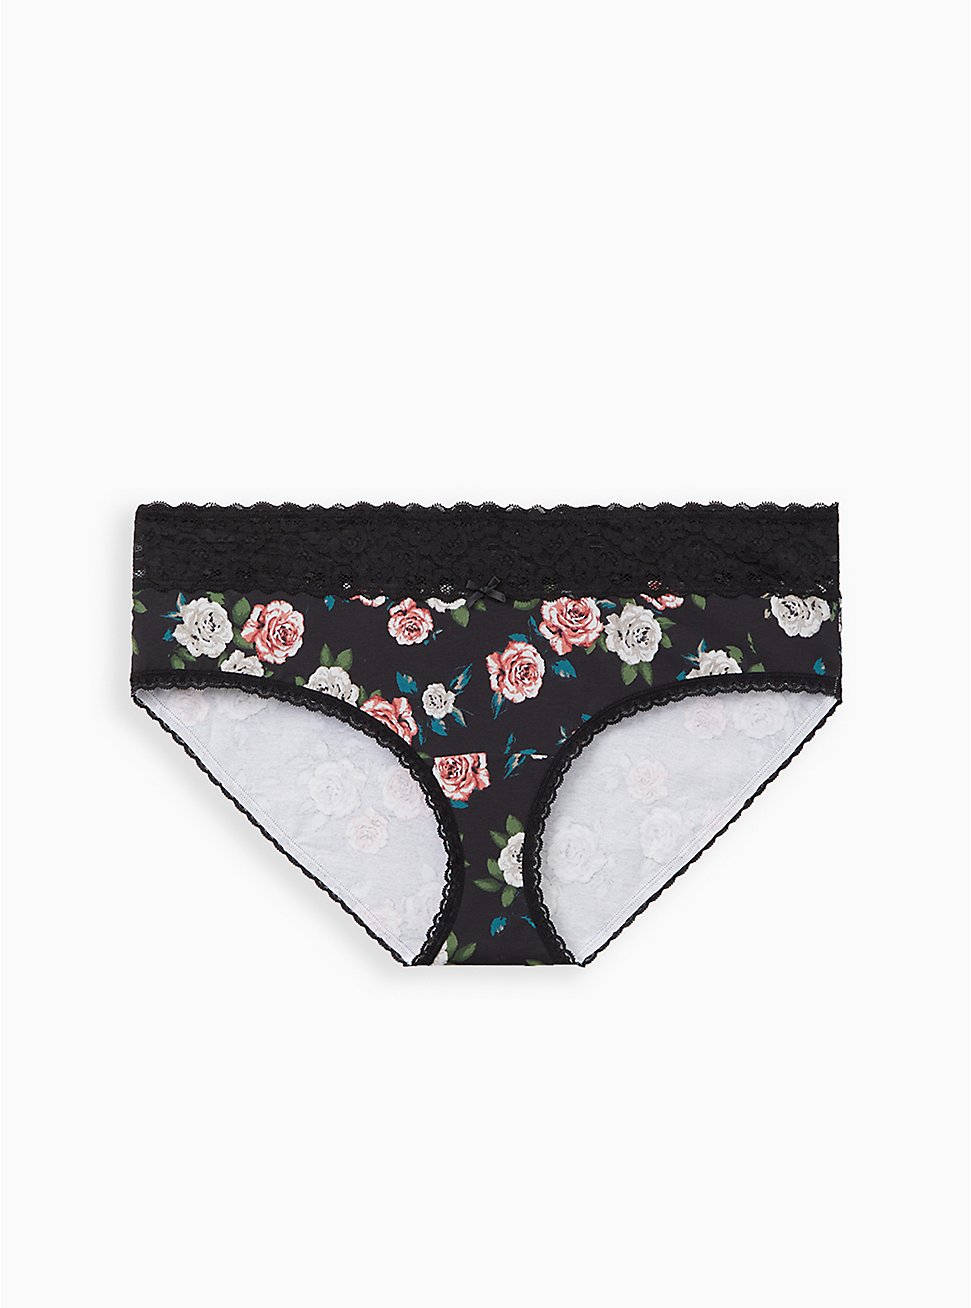 Wide Lace Trim Hipster Panty - Cotton Floral Black, MULTI FORAL, hi-res